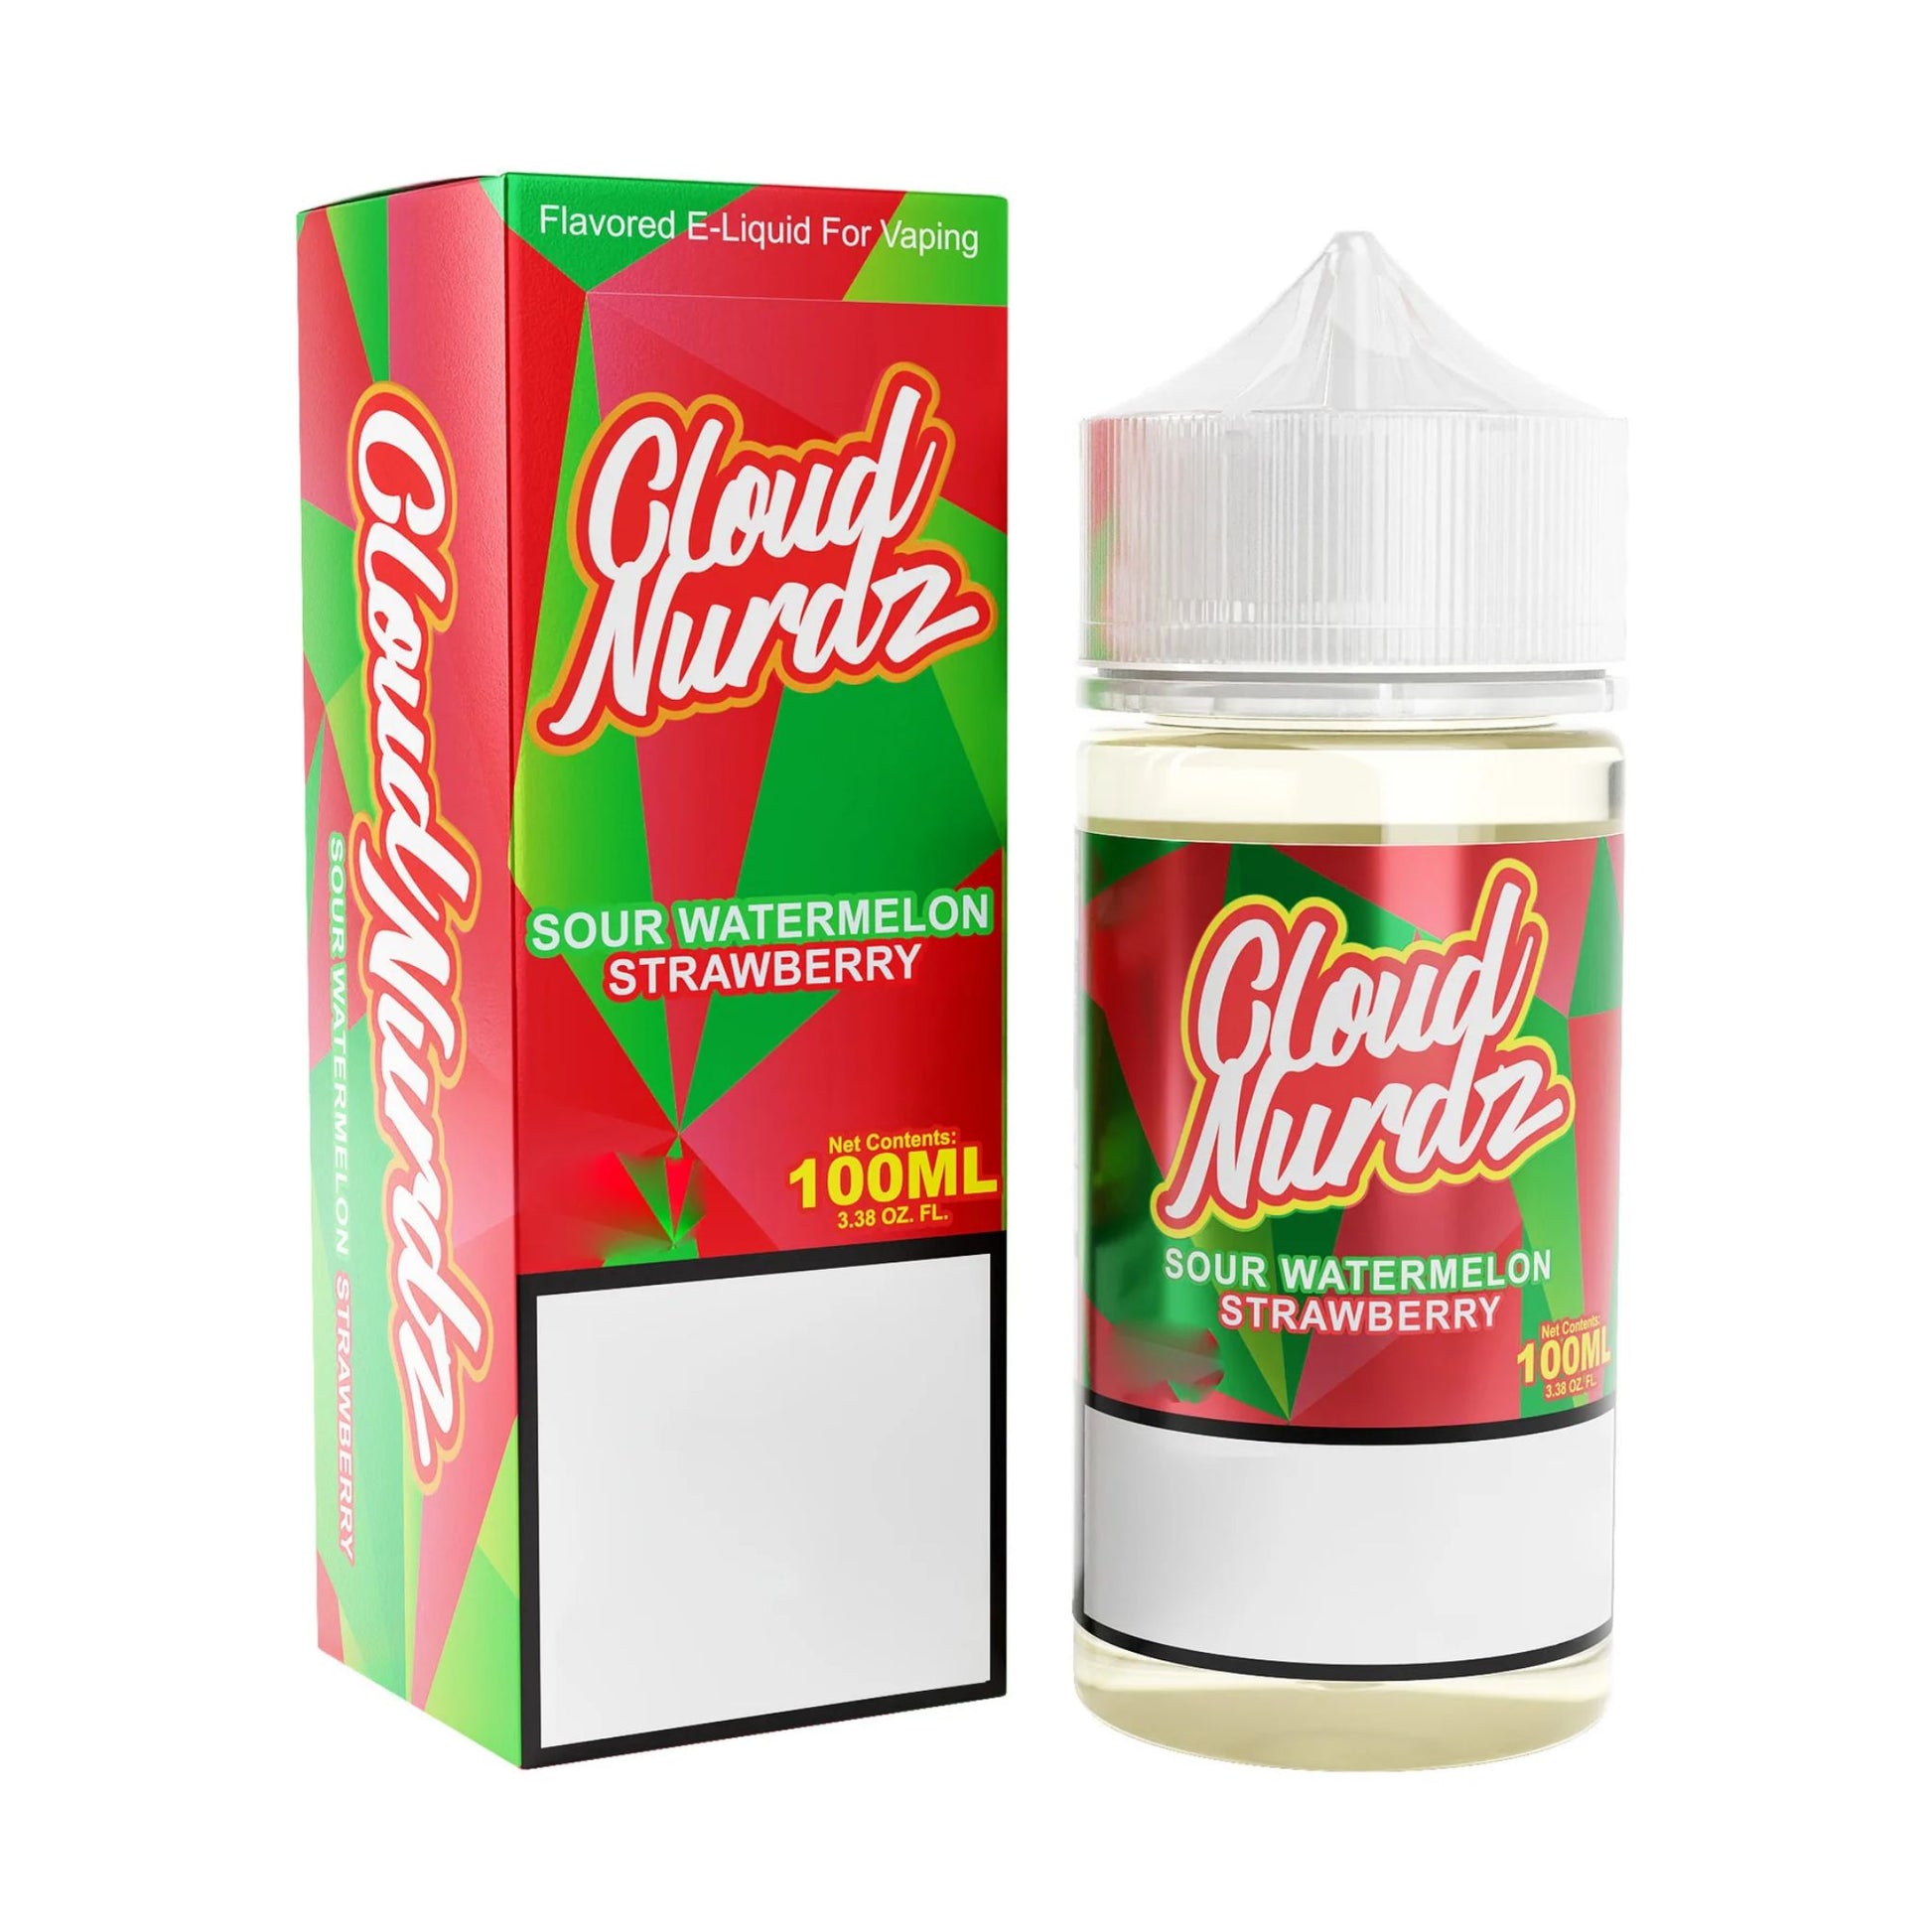 Cloud Nurdz | Sour Watermelon Strawberry | 100ml bottle and box